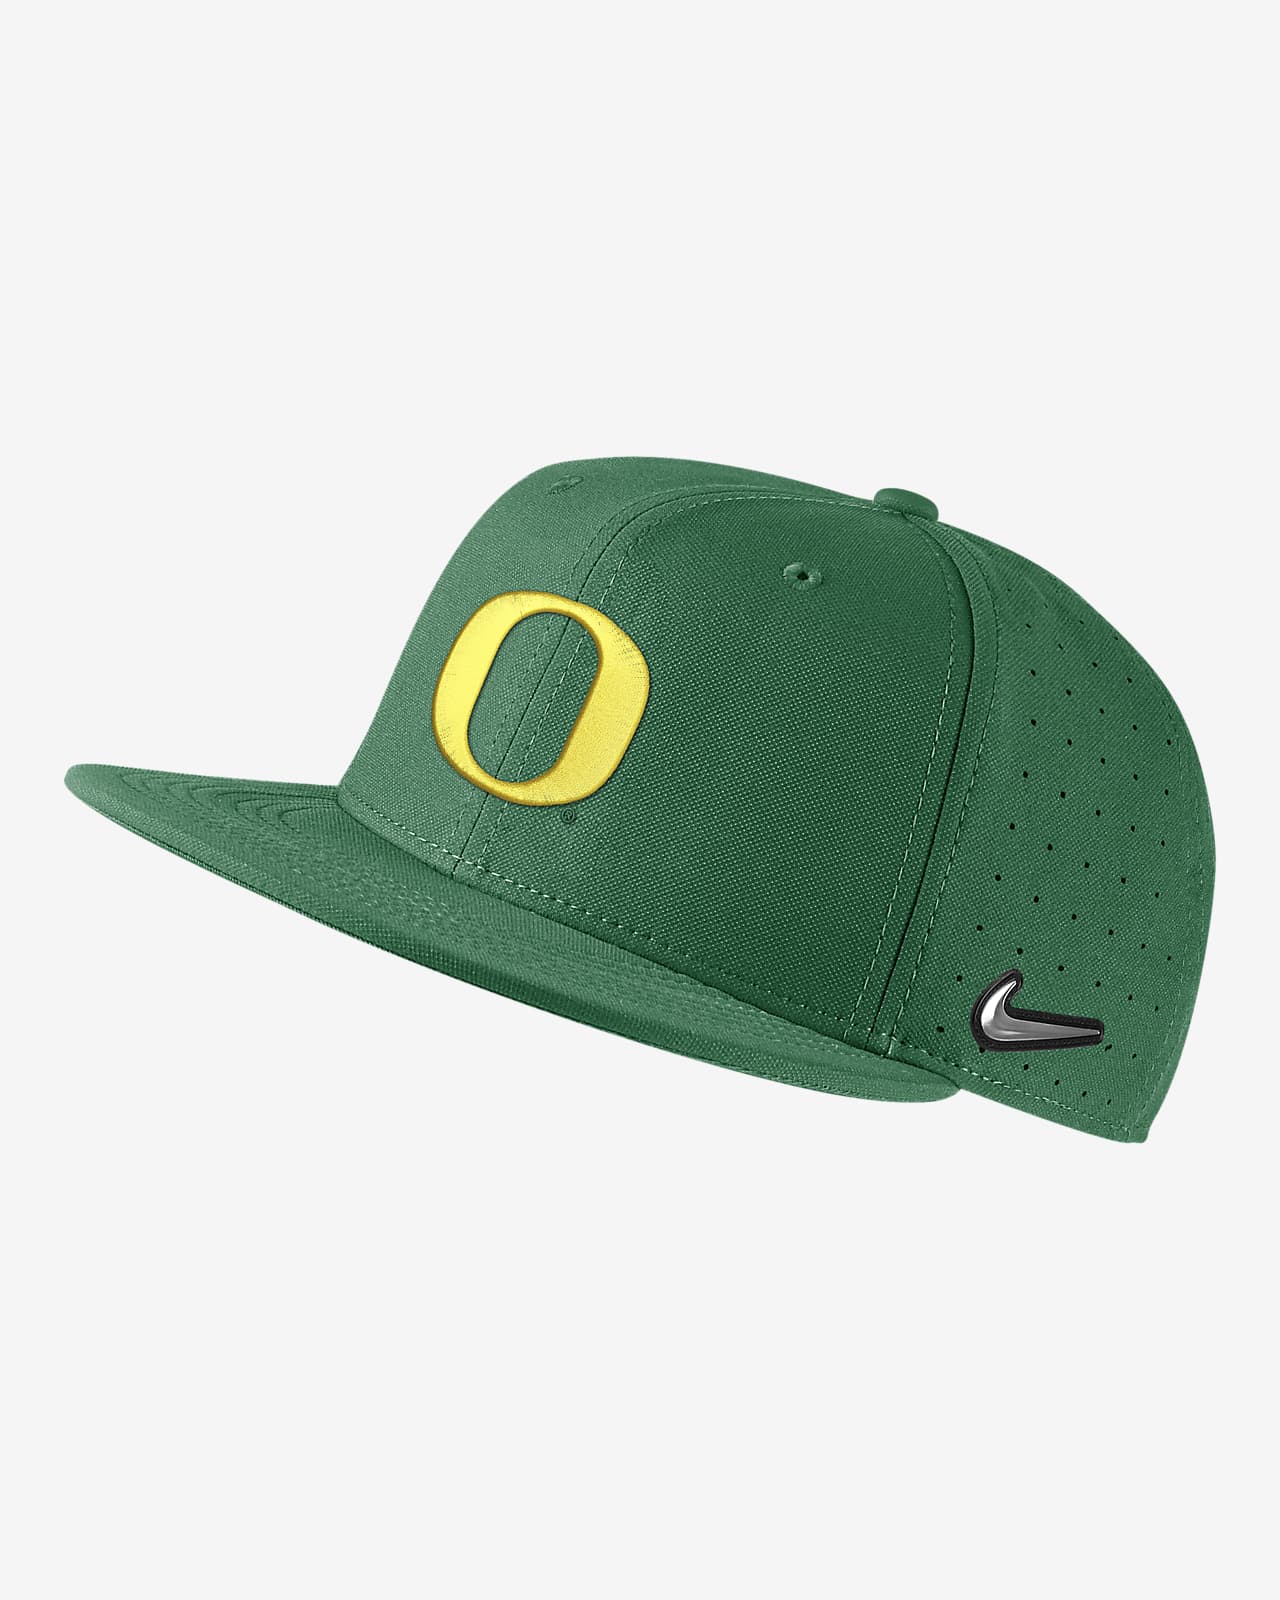 Oregon Nike College Fitted Baseball Hat